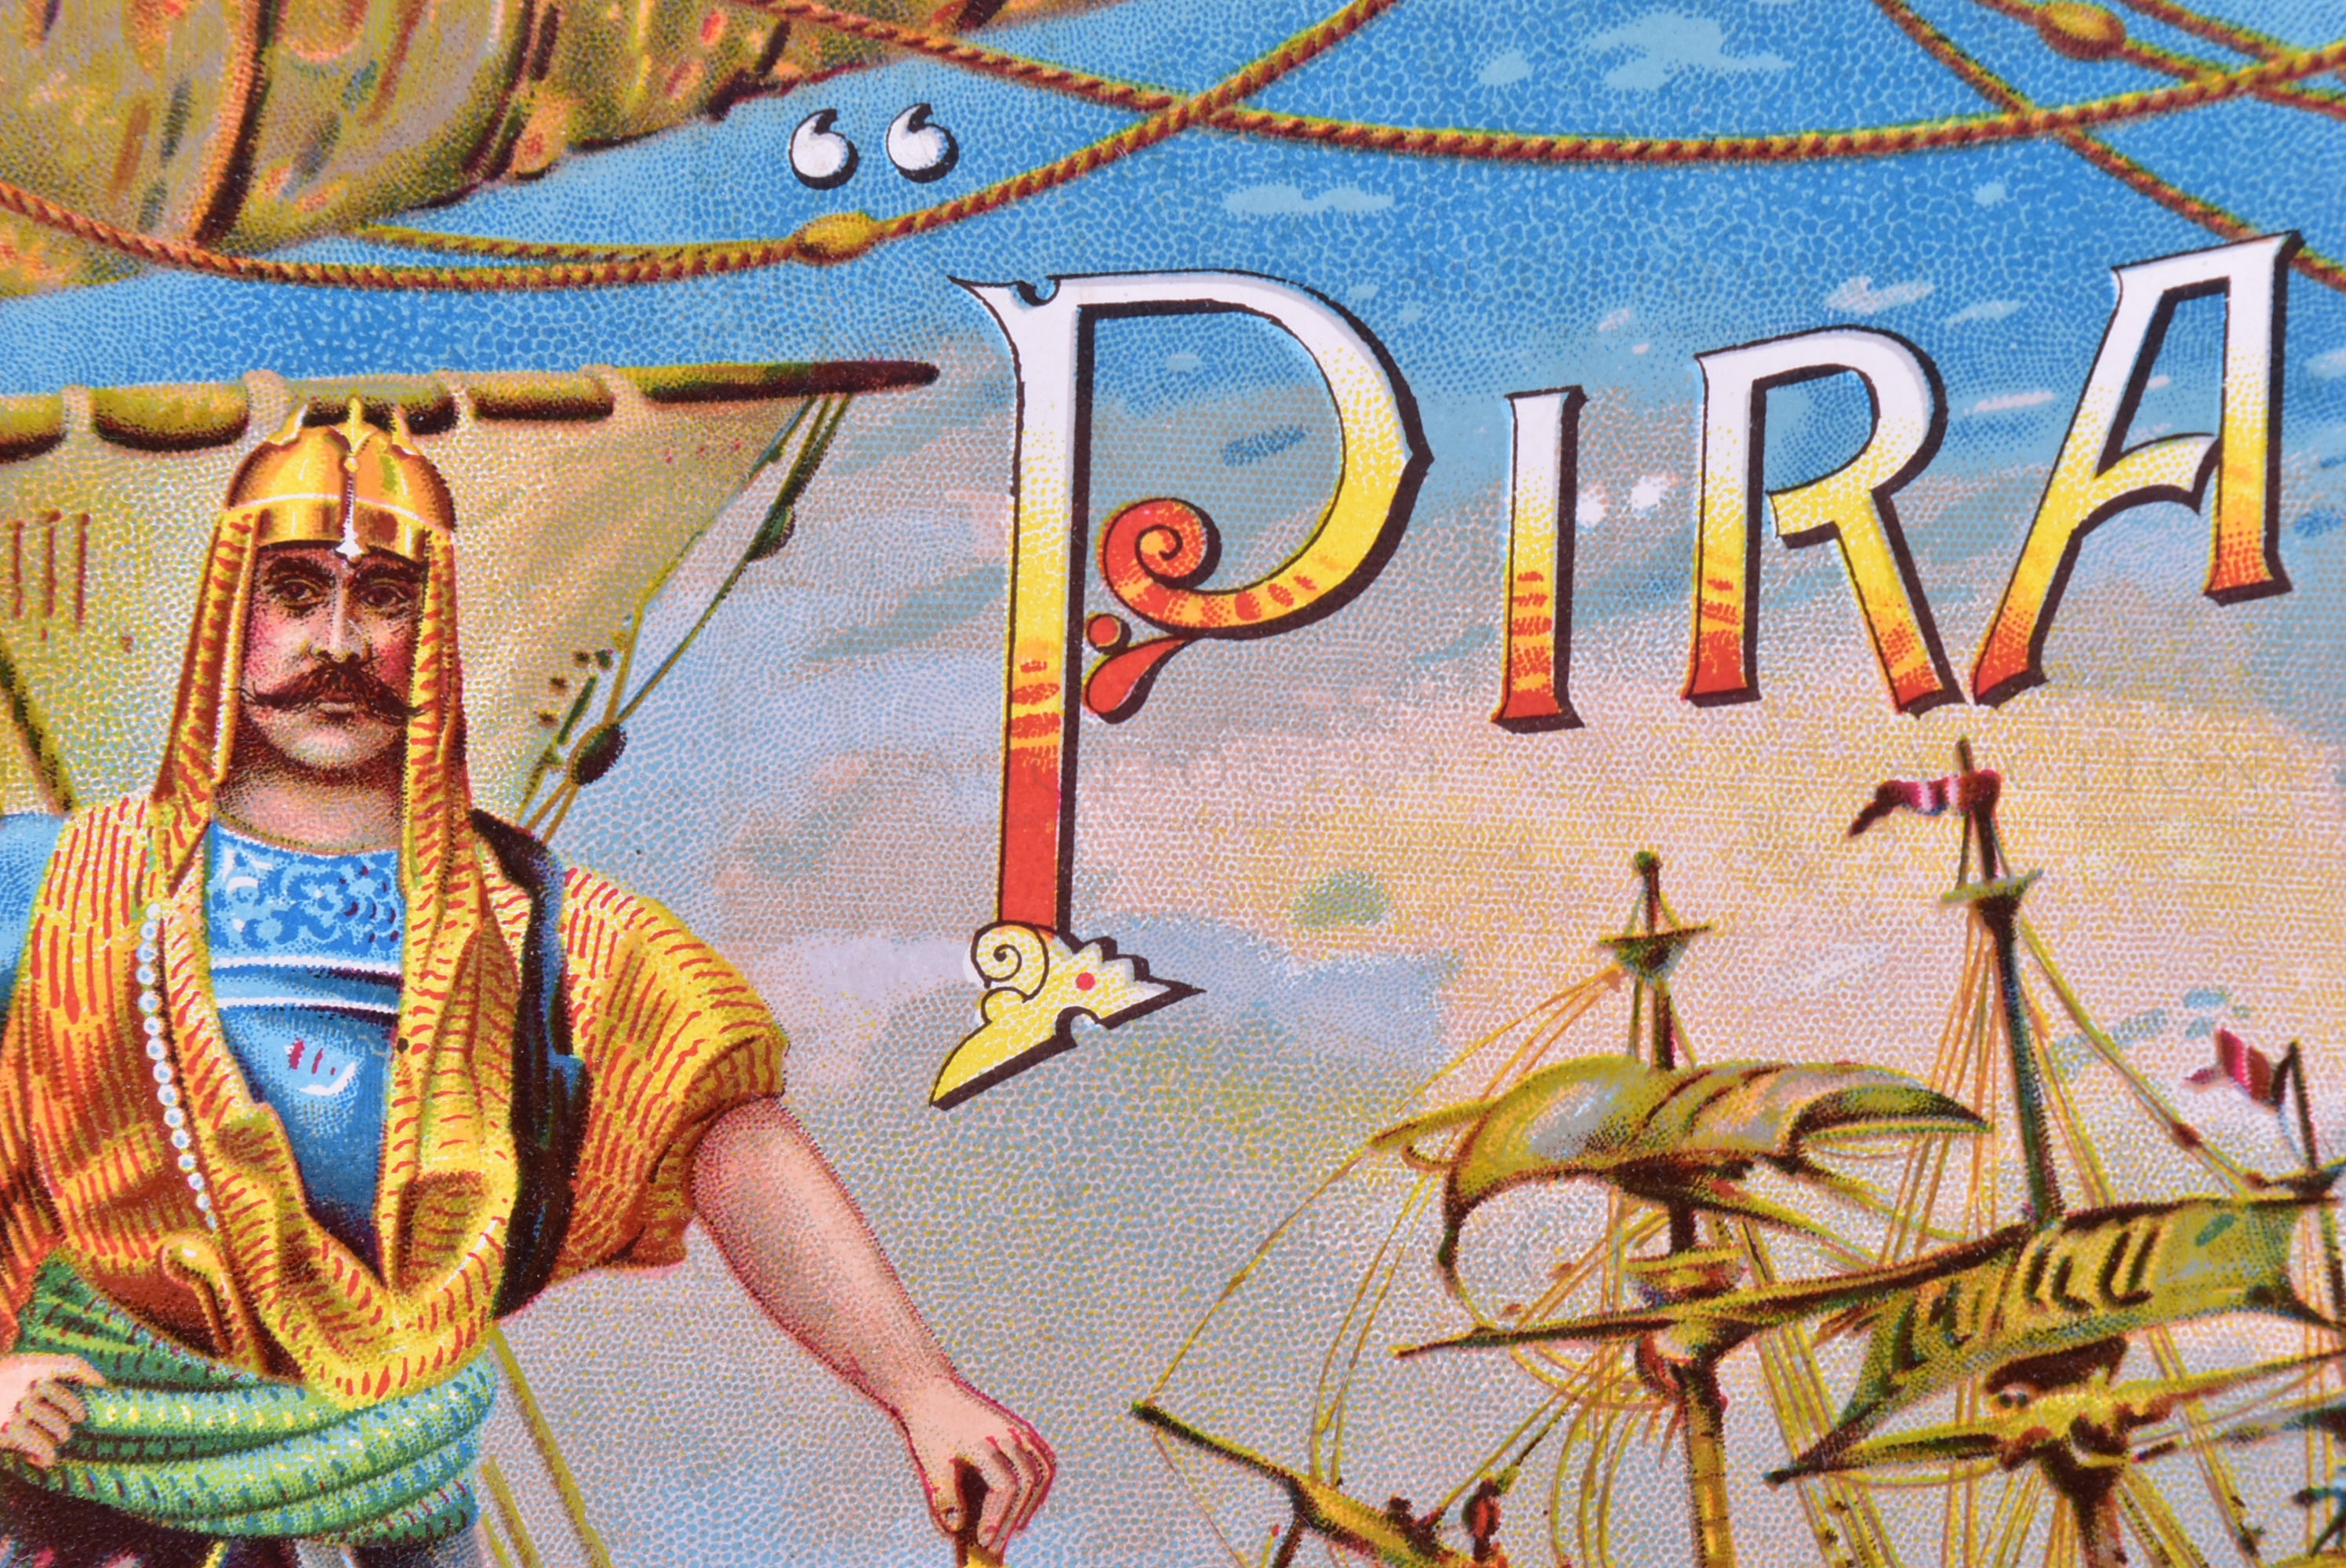 W. D. & H. O. WILLS - PIRATE CIGARETTES - ORIGINAL PRINTER'S PROOF ARTWORK - Image 5 of 5